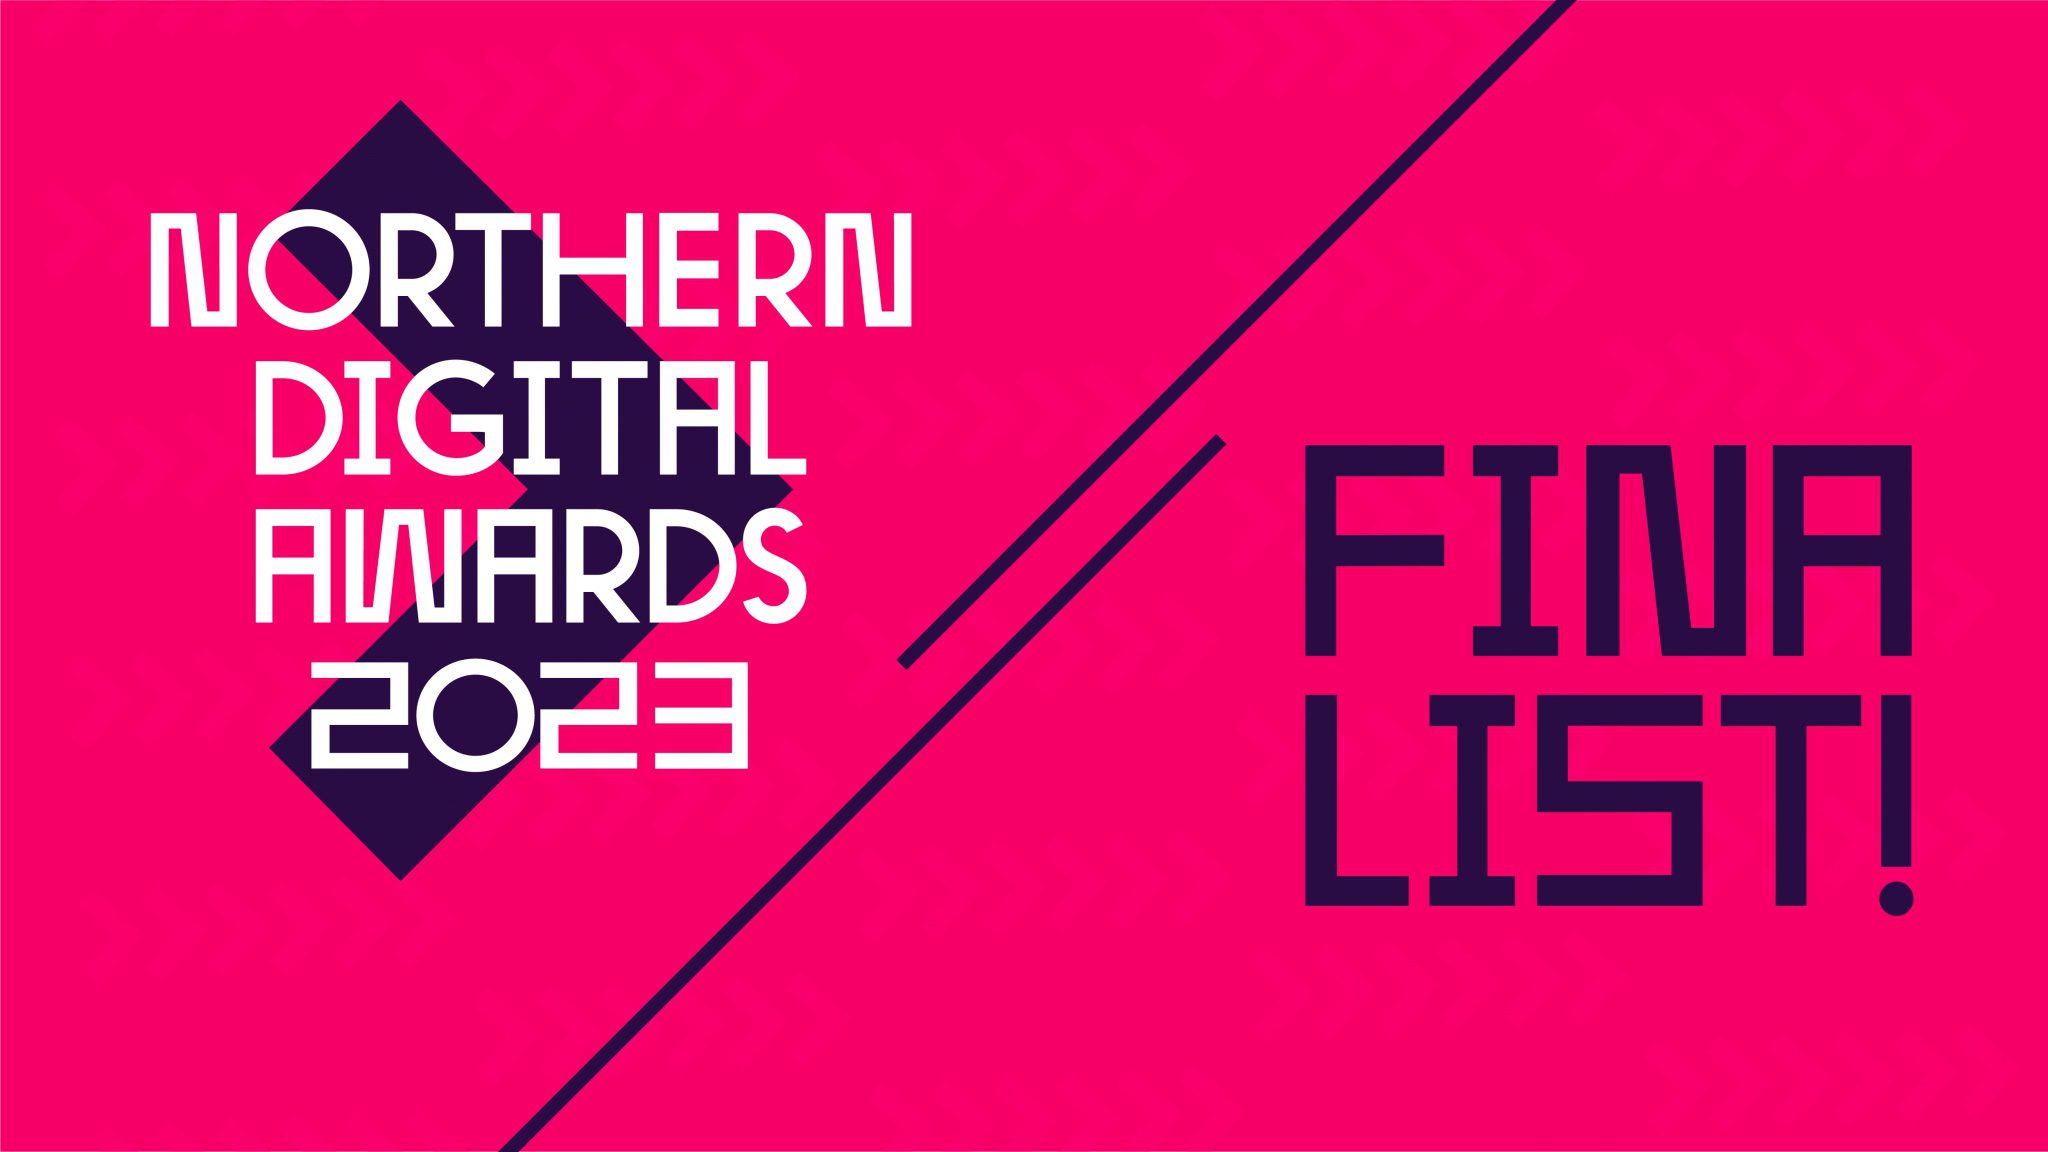 Best Digital Marketing Campaign at the Northern Digital Awards Nomination